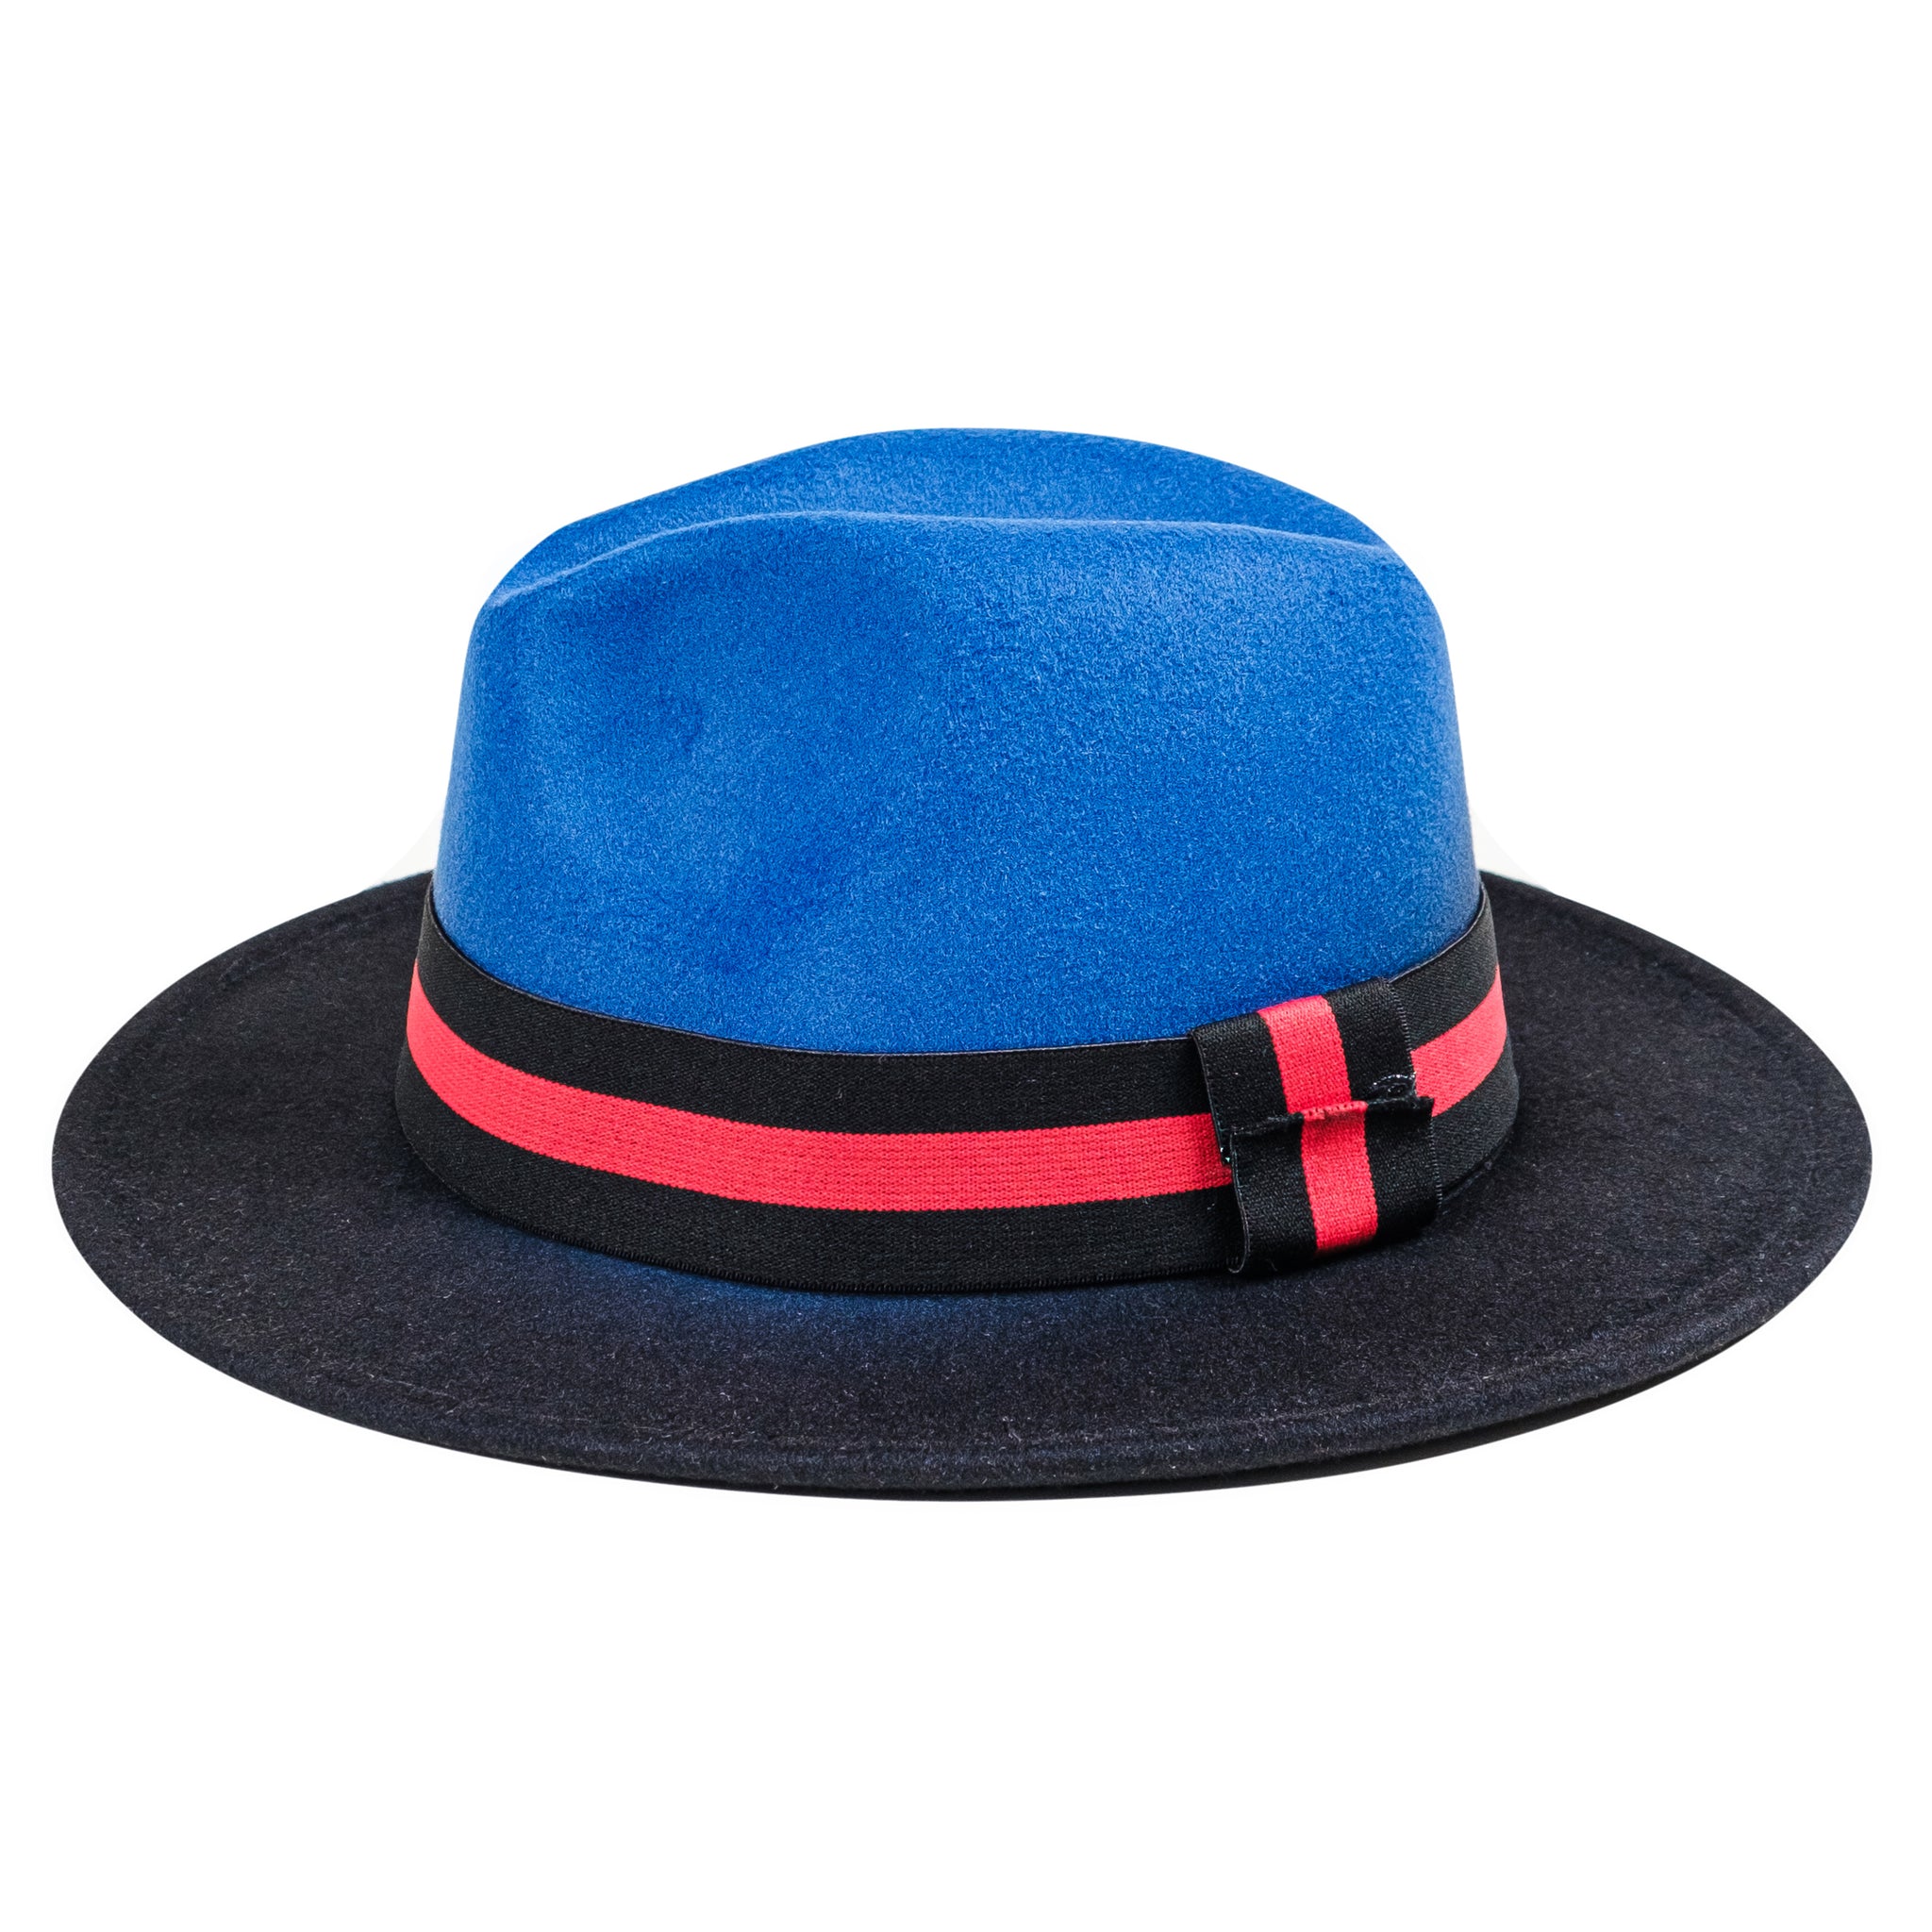 Chokore Double-tone Ombre Fedora Hat (Blue & Black)